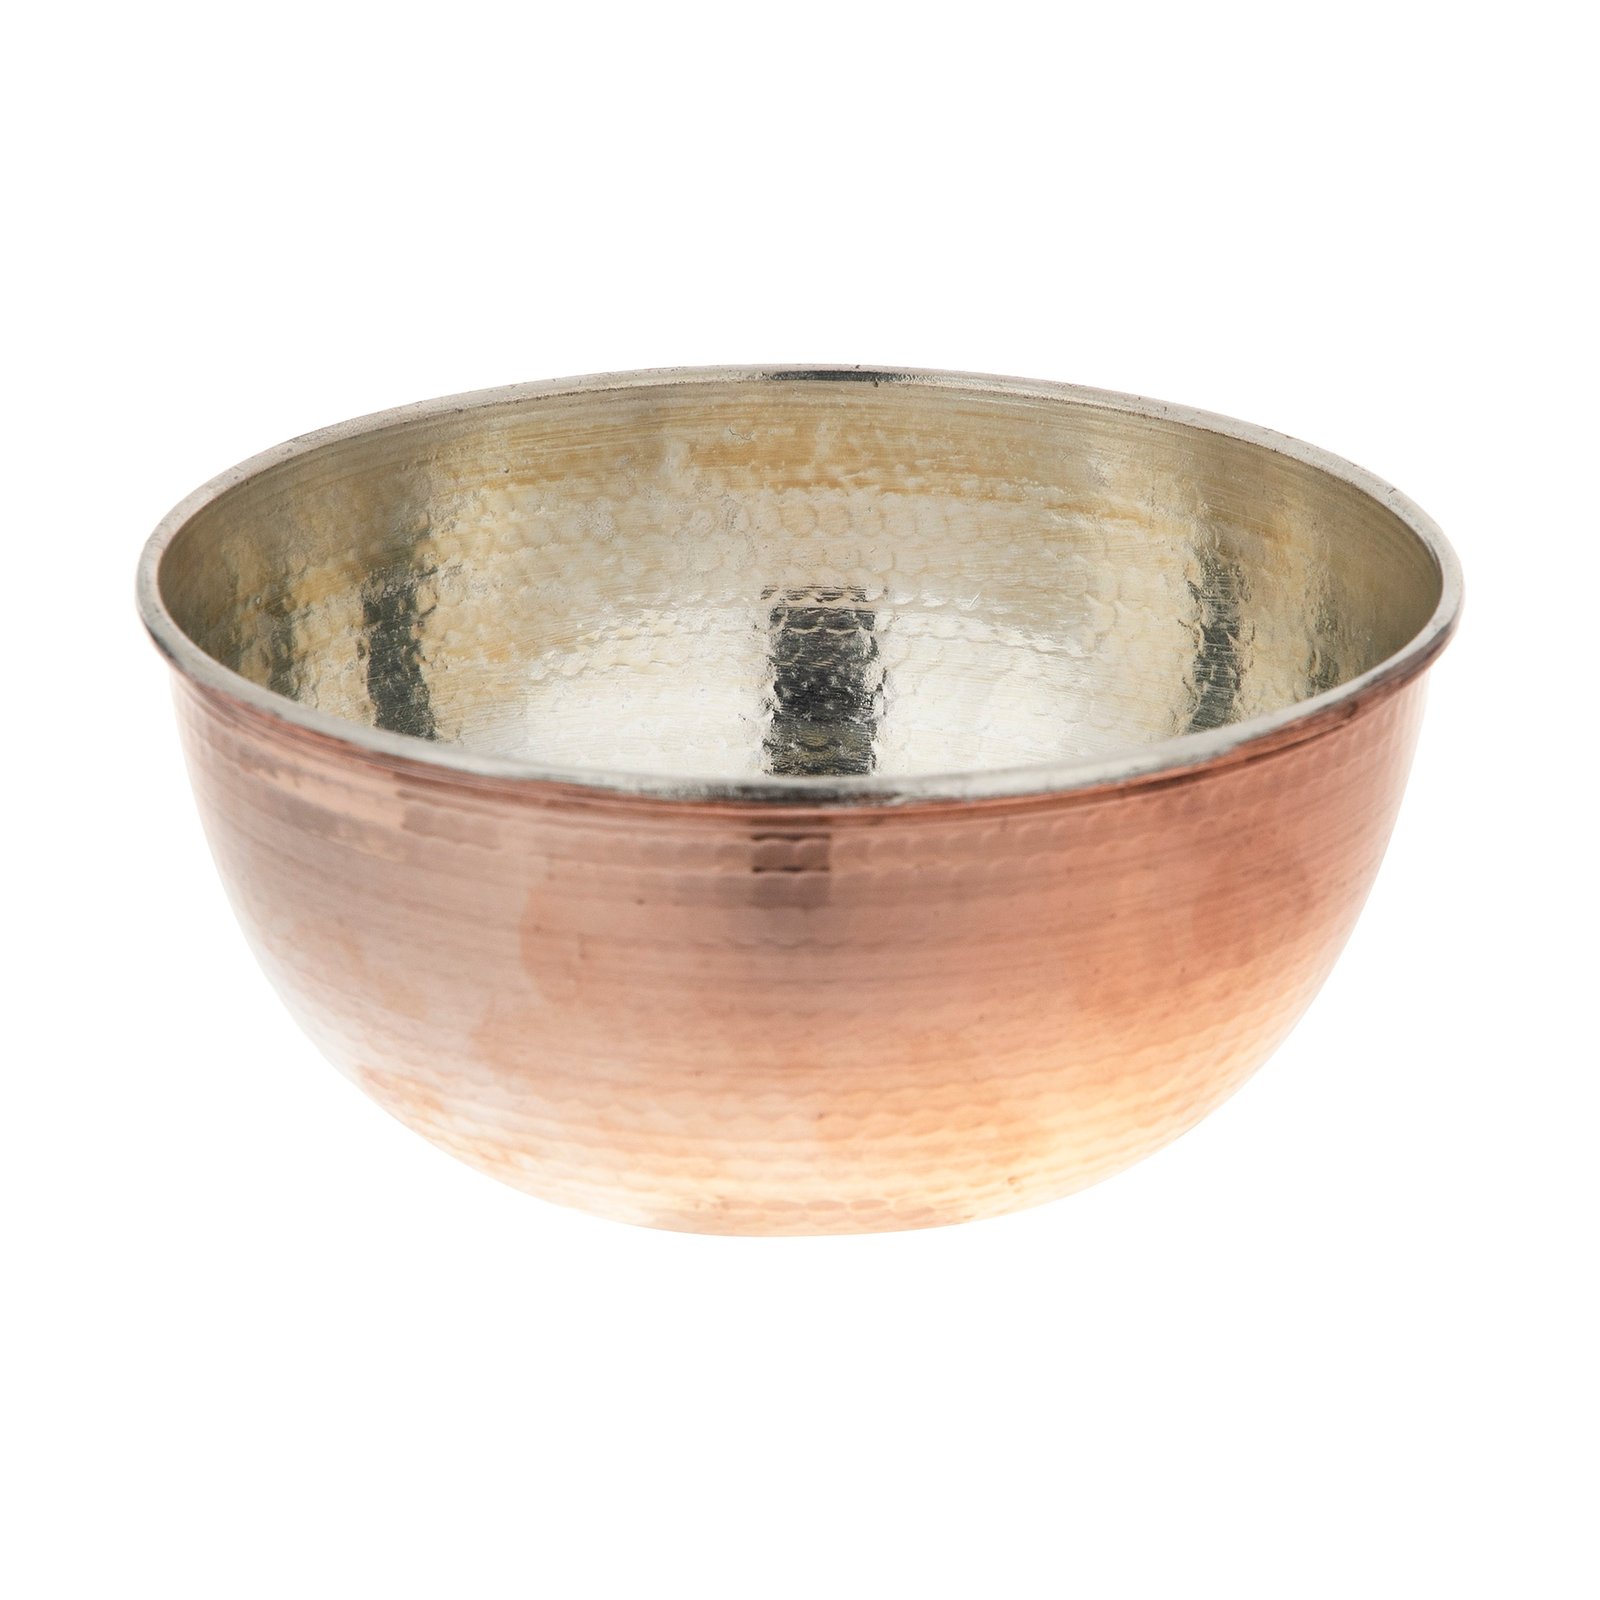 Handicraft Copper bowl model C01,波斯铜制品,铜制品,铜制品价格,铜制品手工,铜料